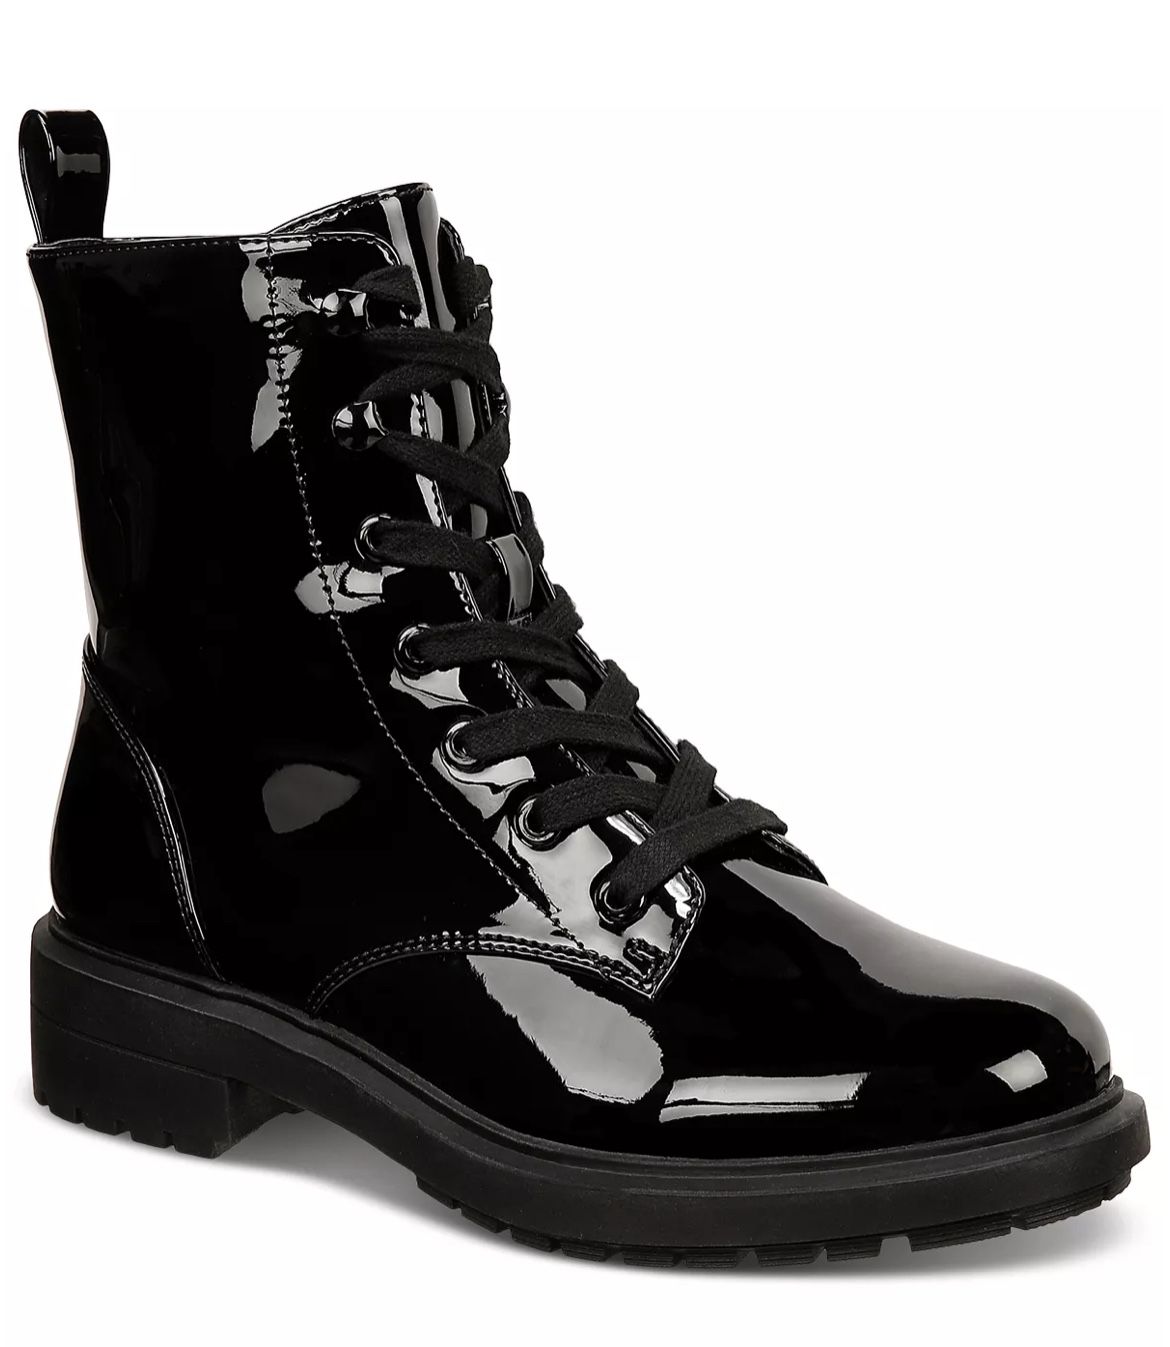 Alfani Patent leather boots Size 7M